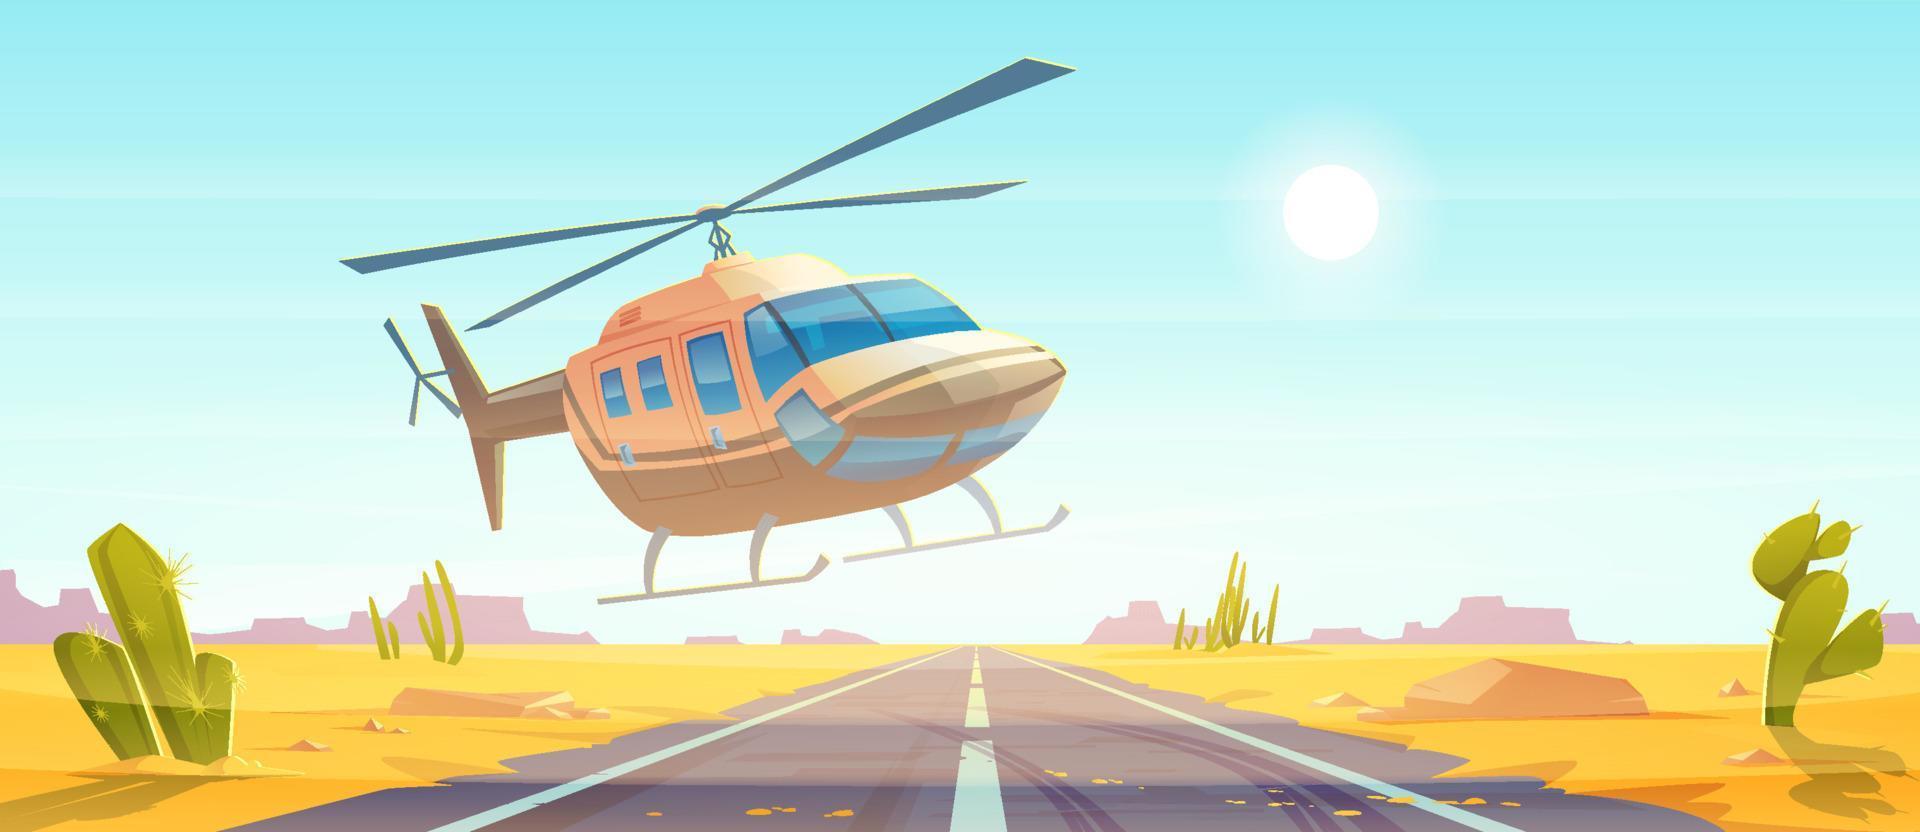 helicóptero pousando na estrada vazia na natureza do deserto vetor